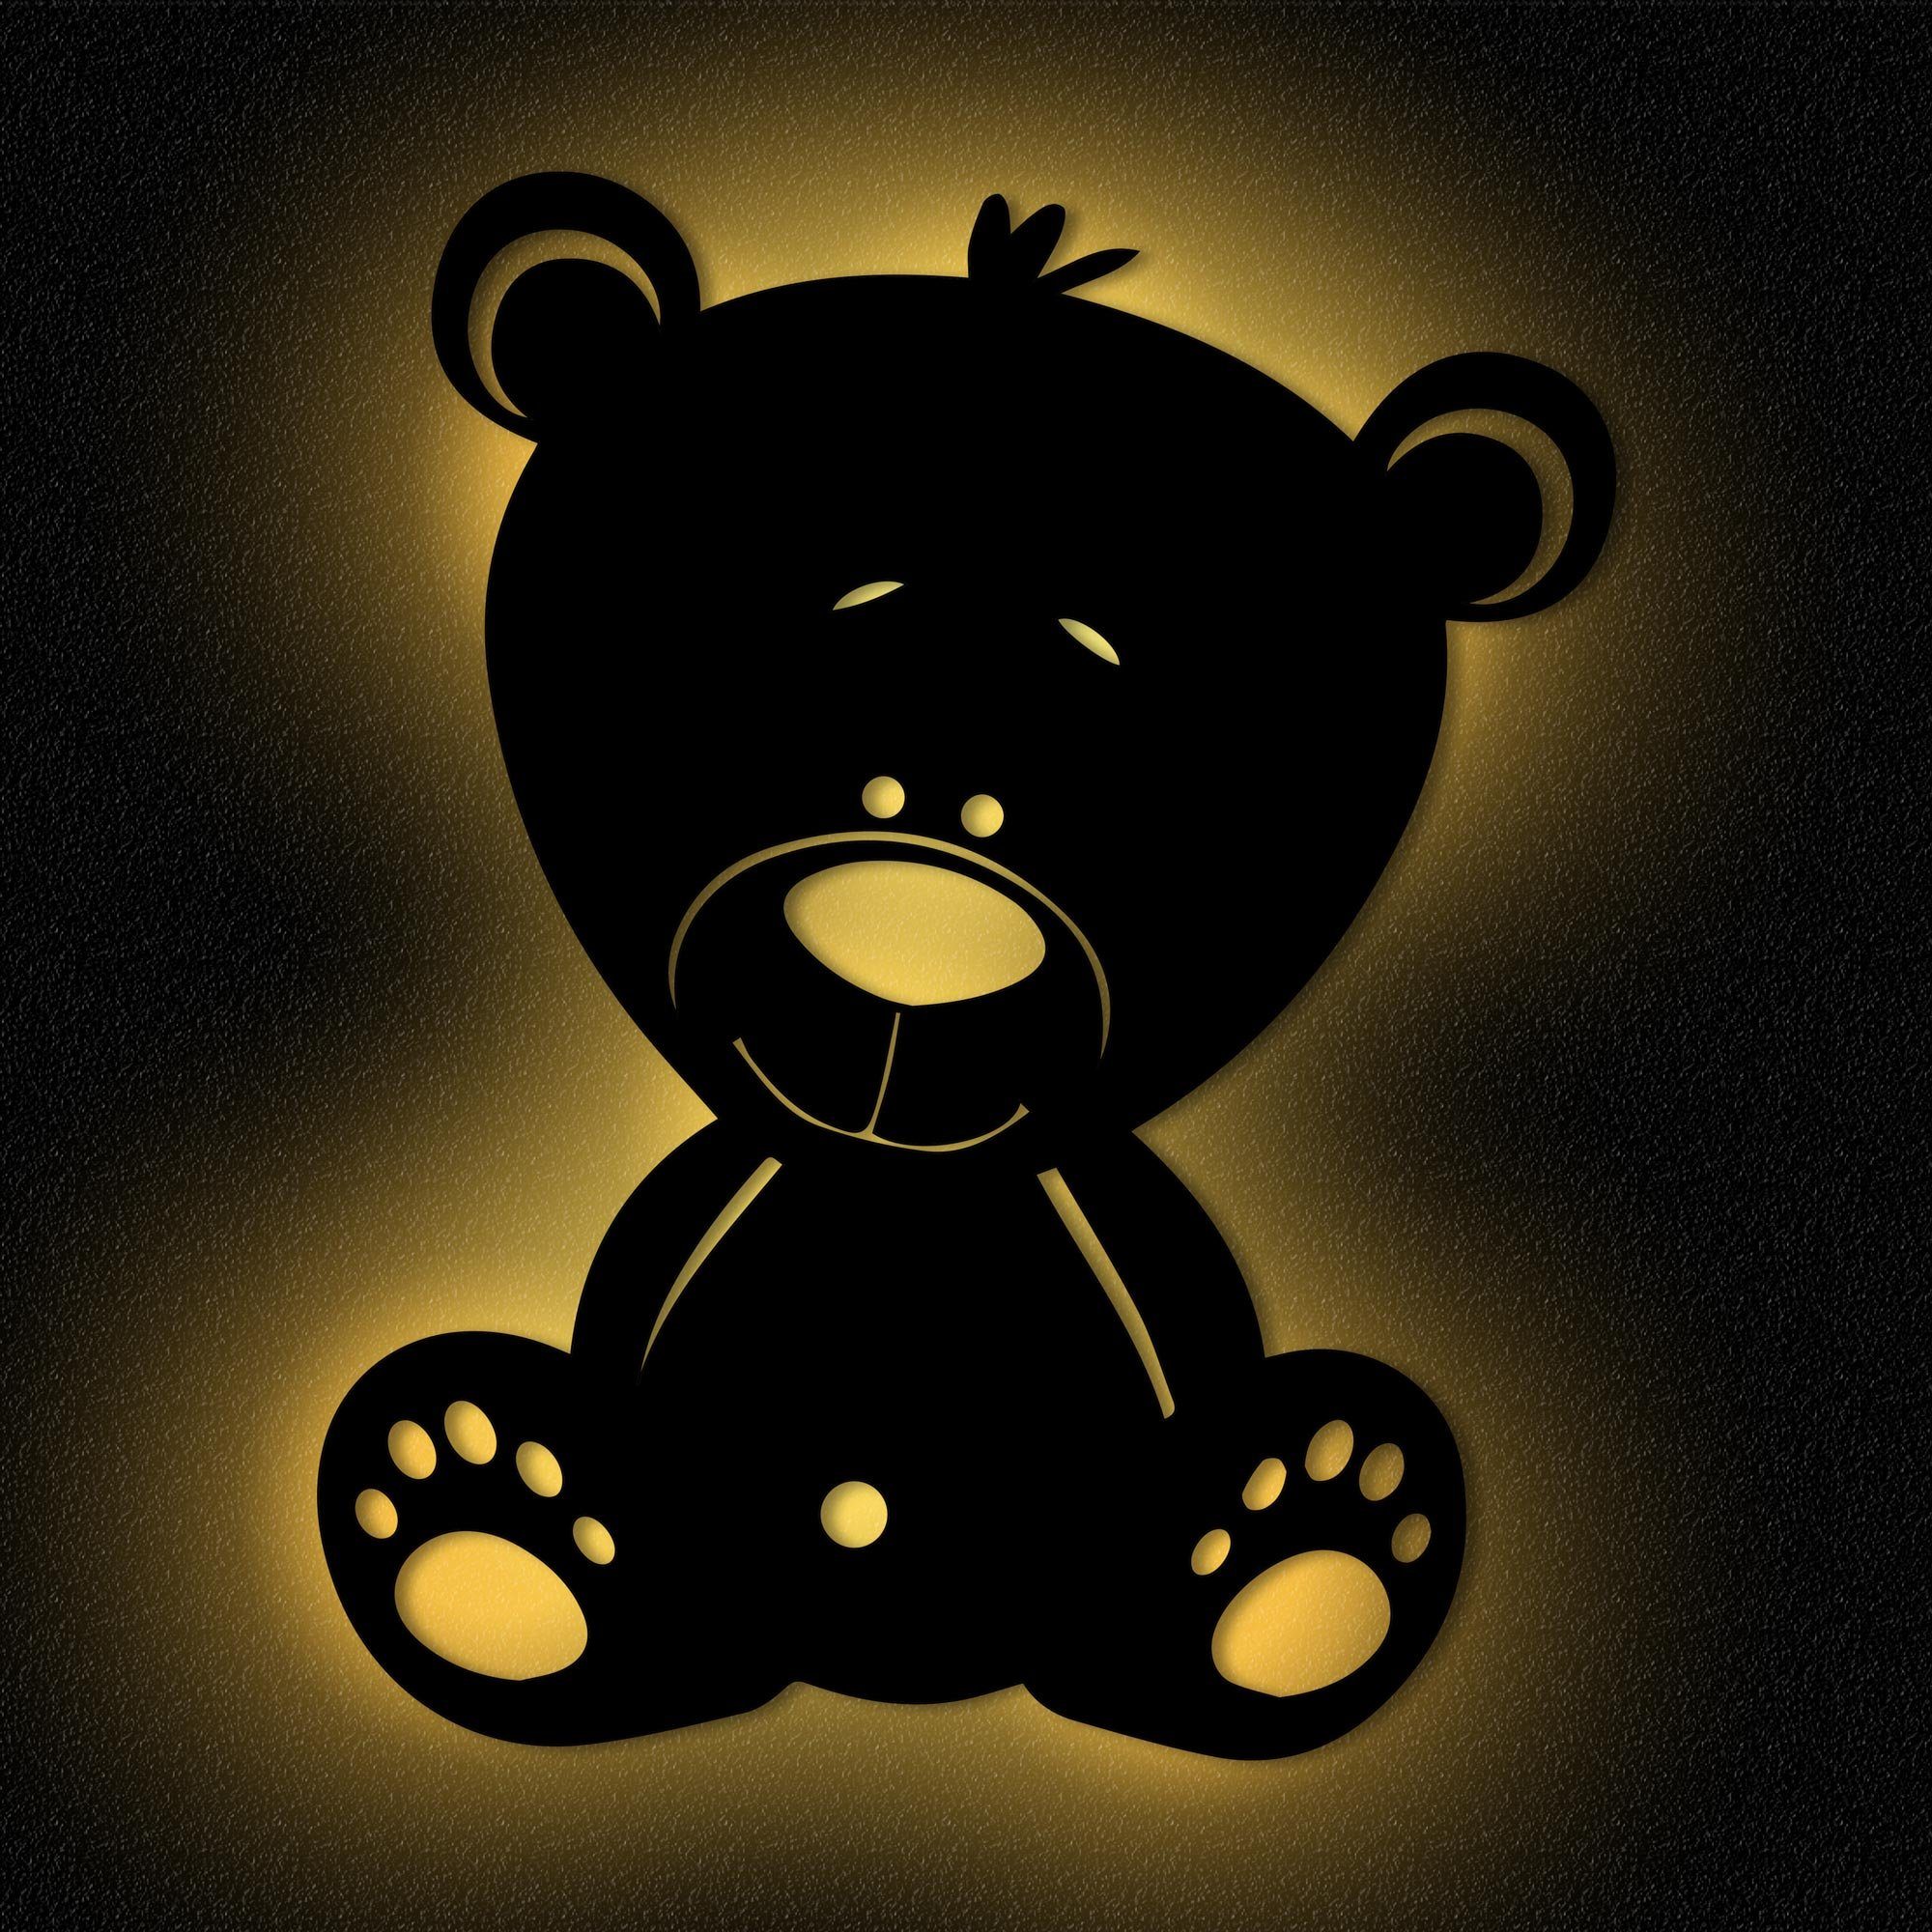 LED Nachtlicht Namofactur LED Kinder Warmweiß MDF Teddy Wandlampe fest Kinderzimmer Nachtlicht Bär integriert, I Holz,